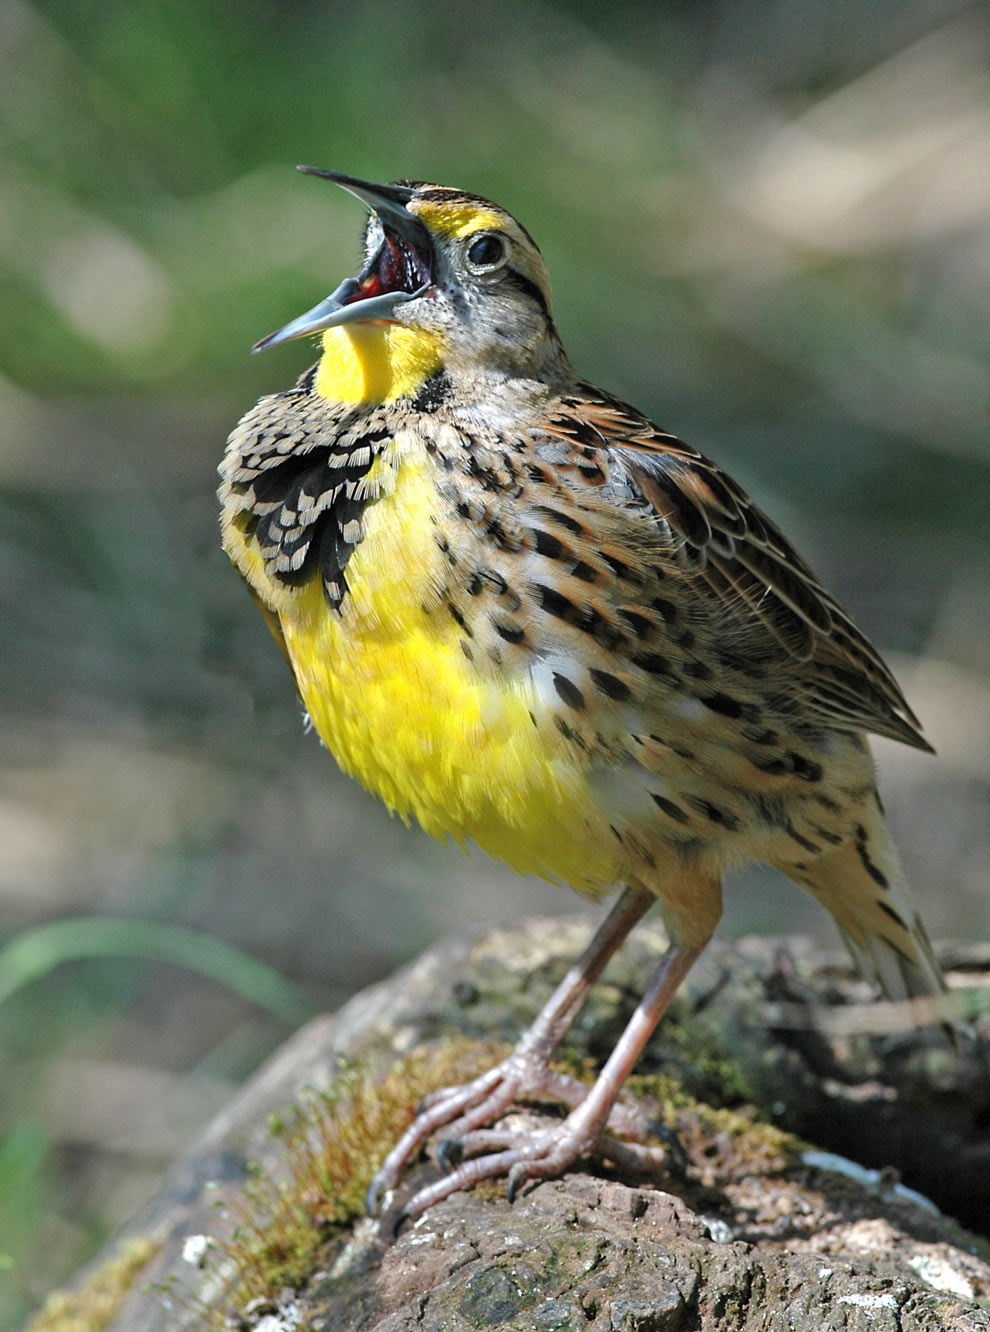 A meadowlark singing